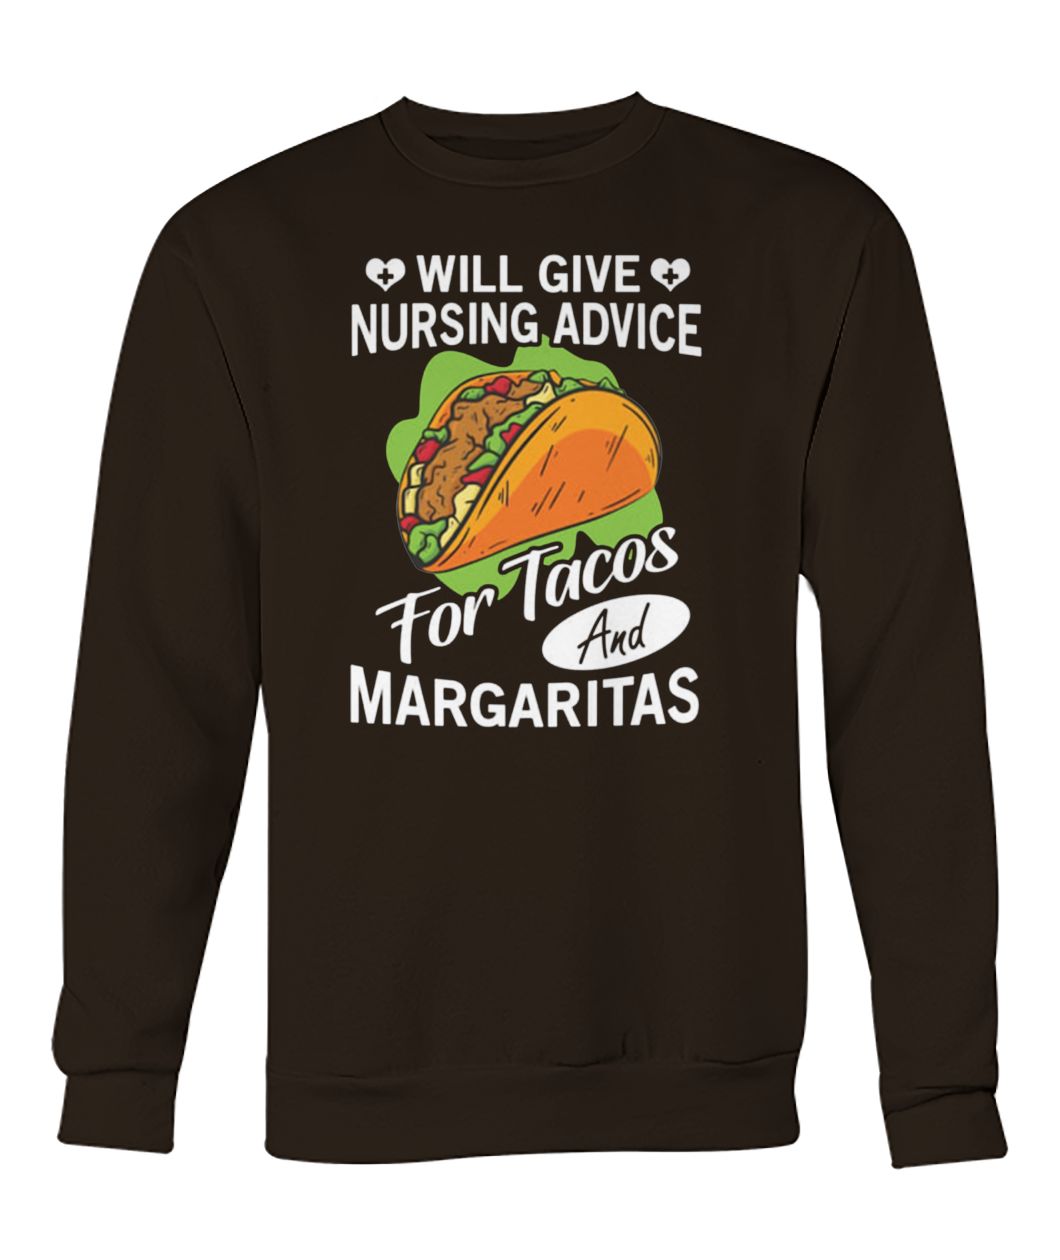 Will give nursing advice for tacos margaritas crew neck sweatshirt